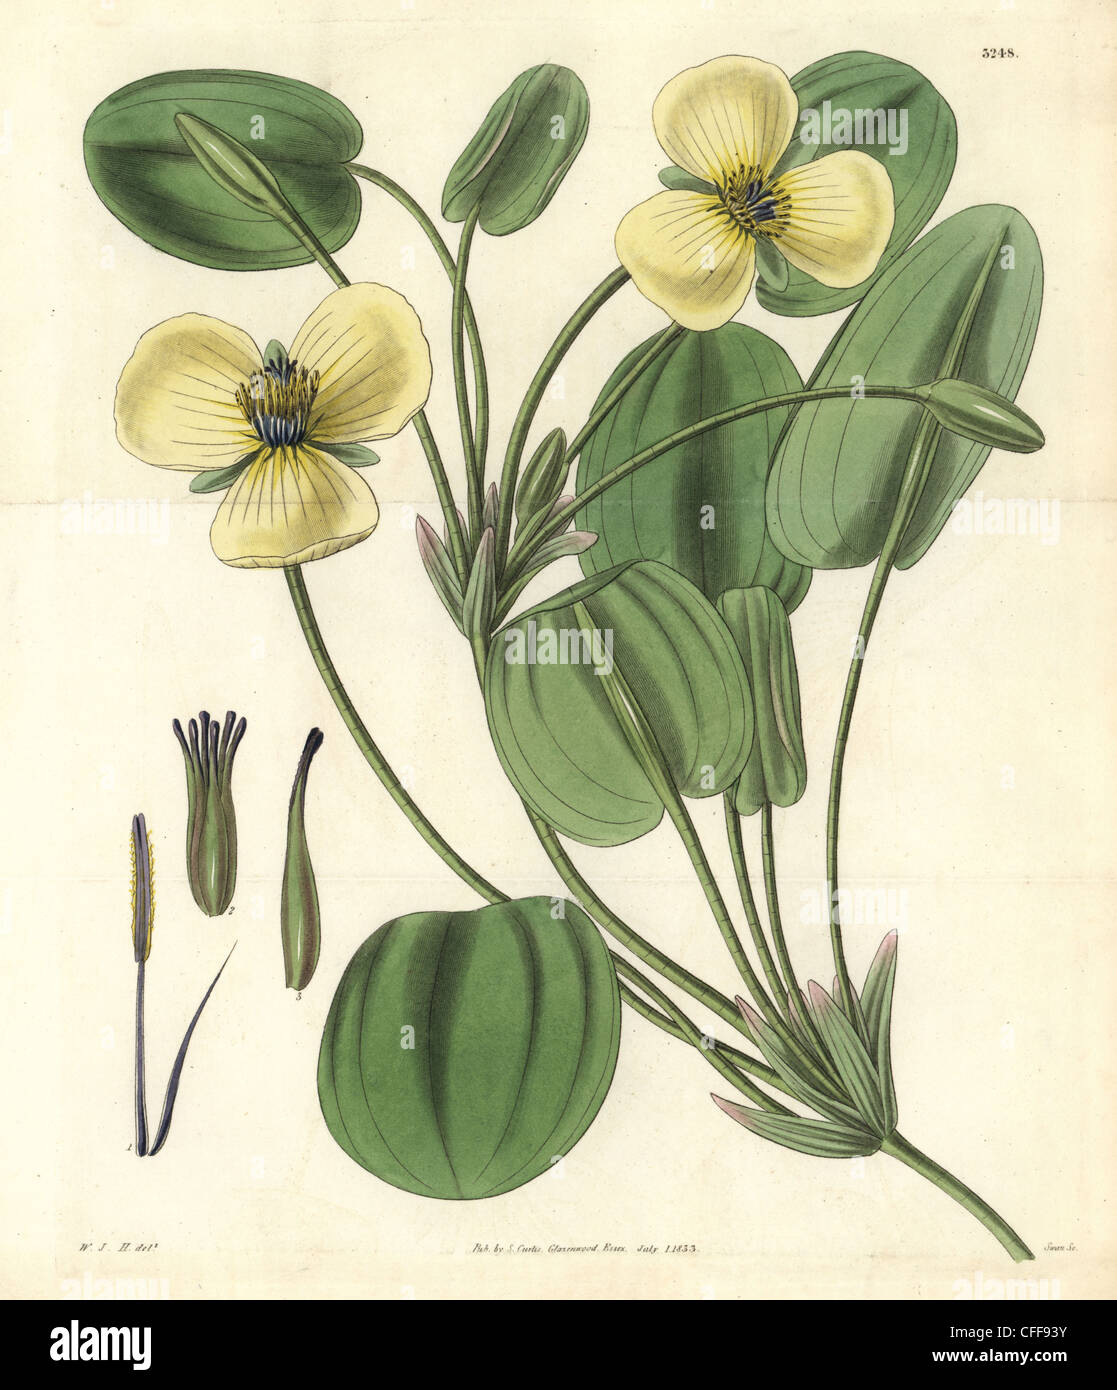 Humboldt's limnocharis or water poppy, Limnocharis humboldtii or Hydrocleys nymphoides. Stock Photo